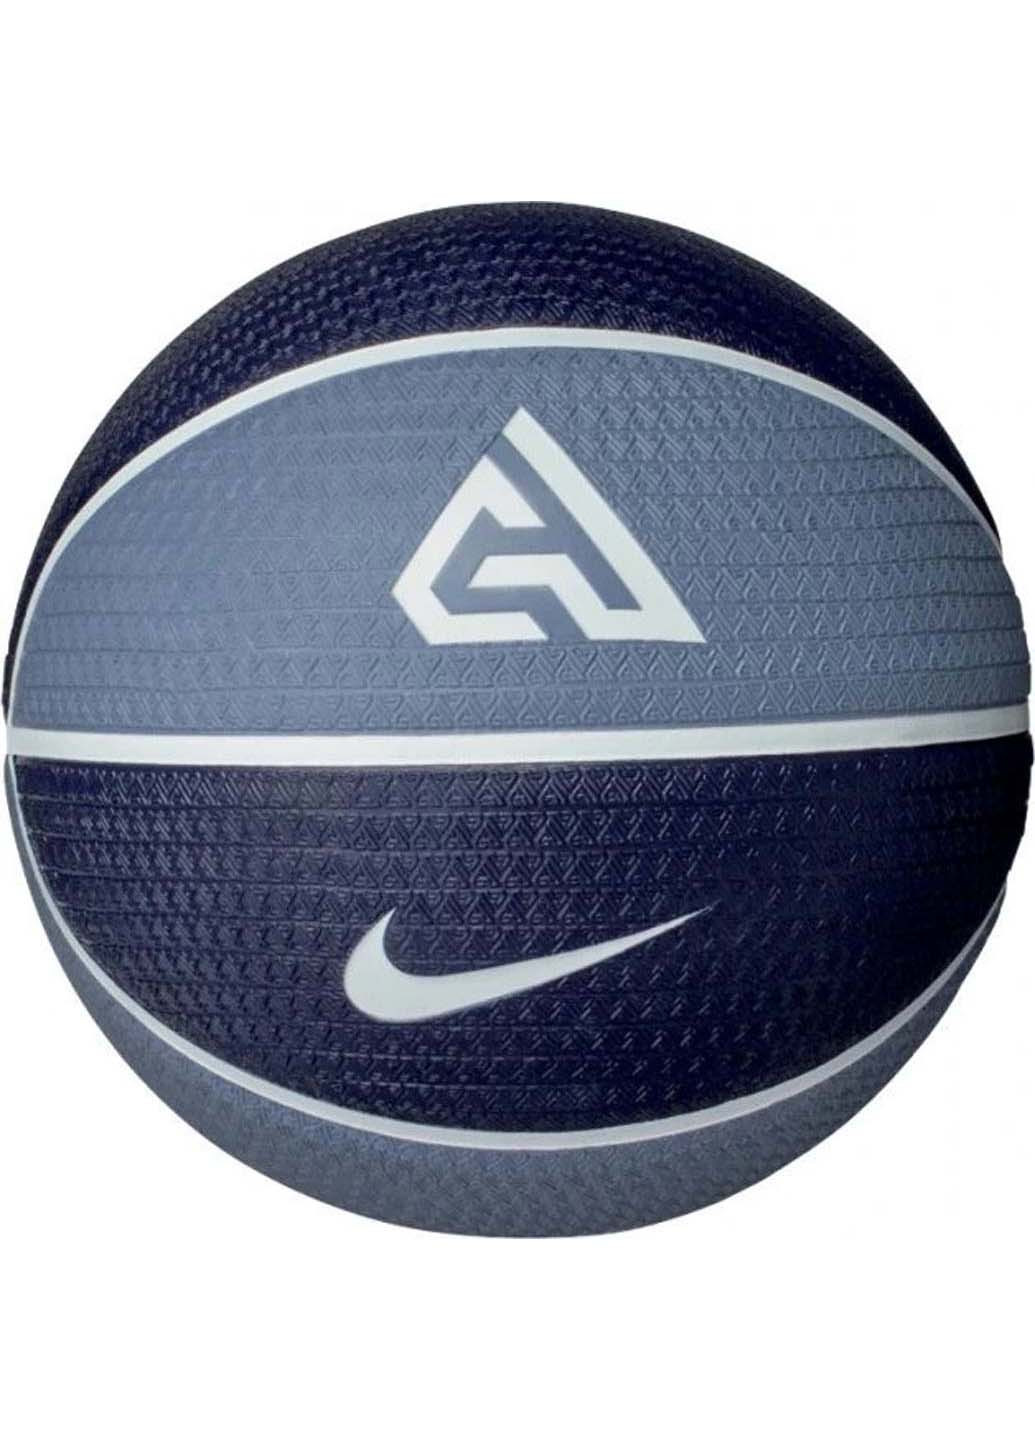 М'яч баскетбольний Playground 8P 2.0 G Antetokounmpo нар. 7 Nike (257607074)